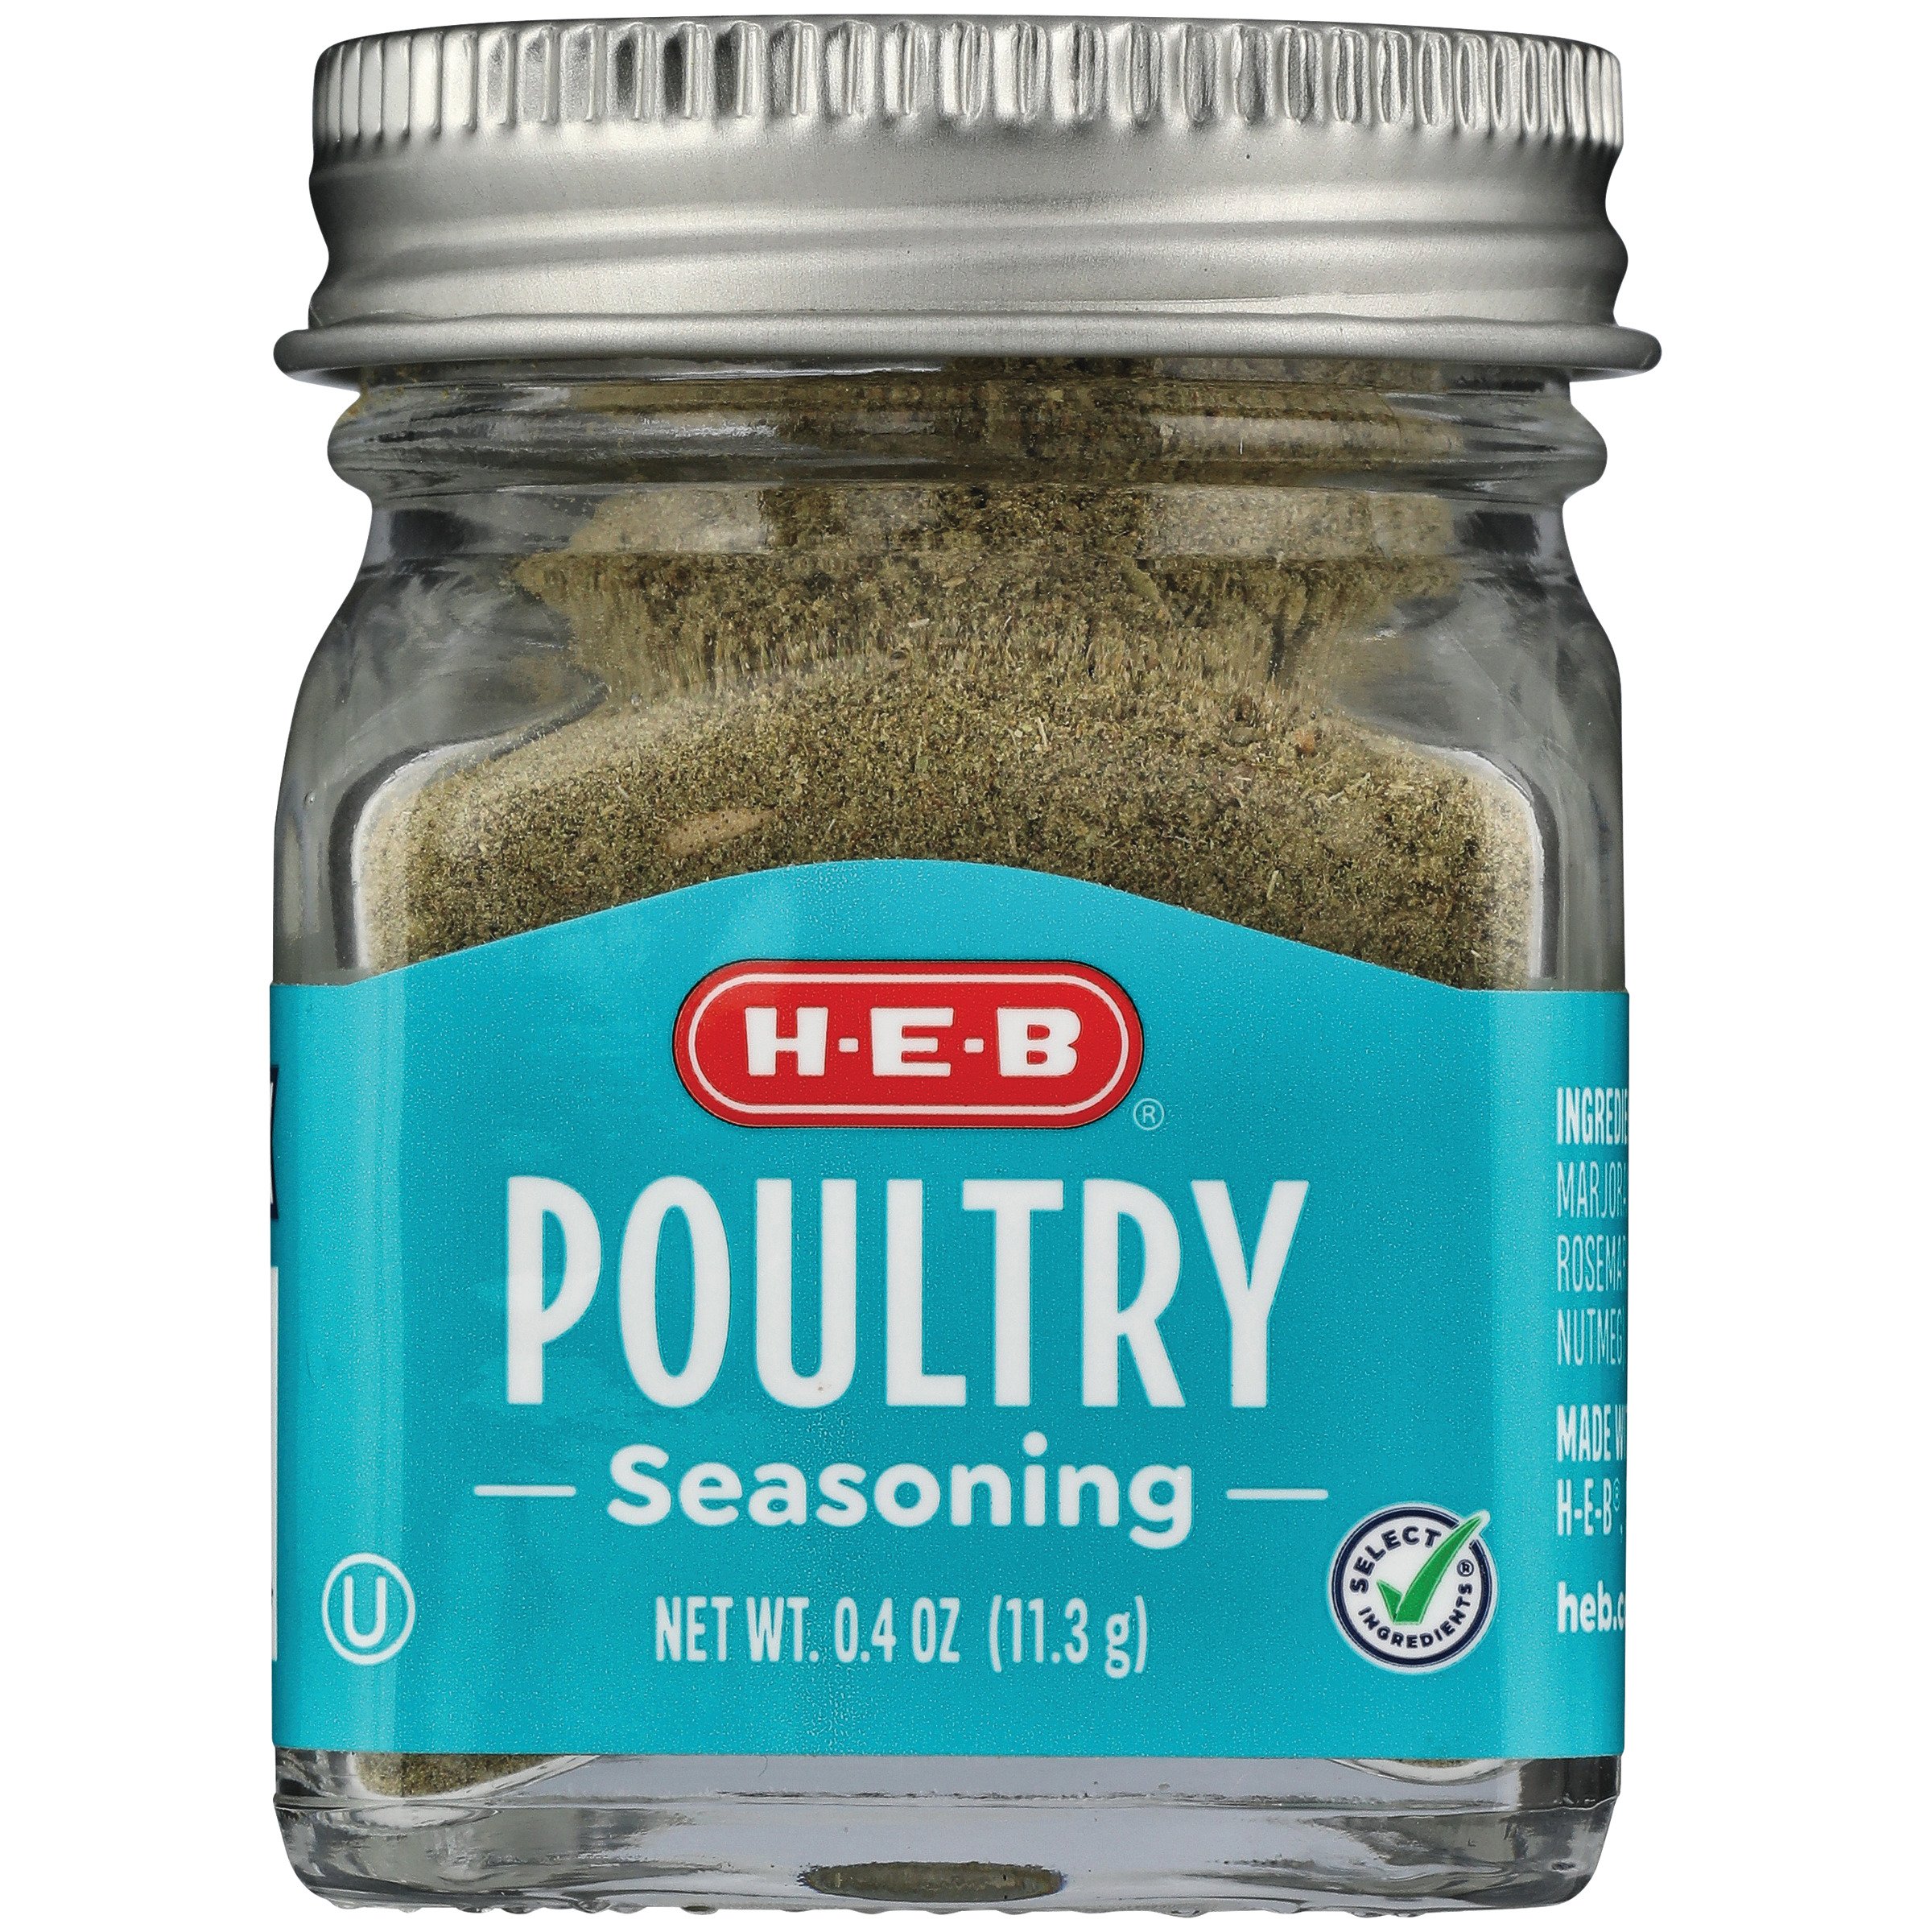 H-E-B Poultry Seasoning - Shop Spice Mixes at H-E-B